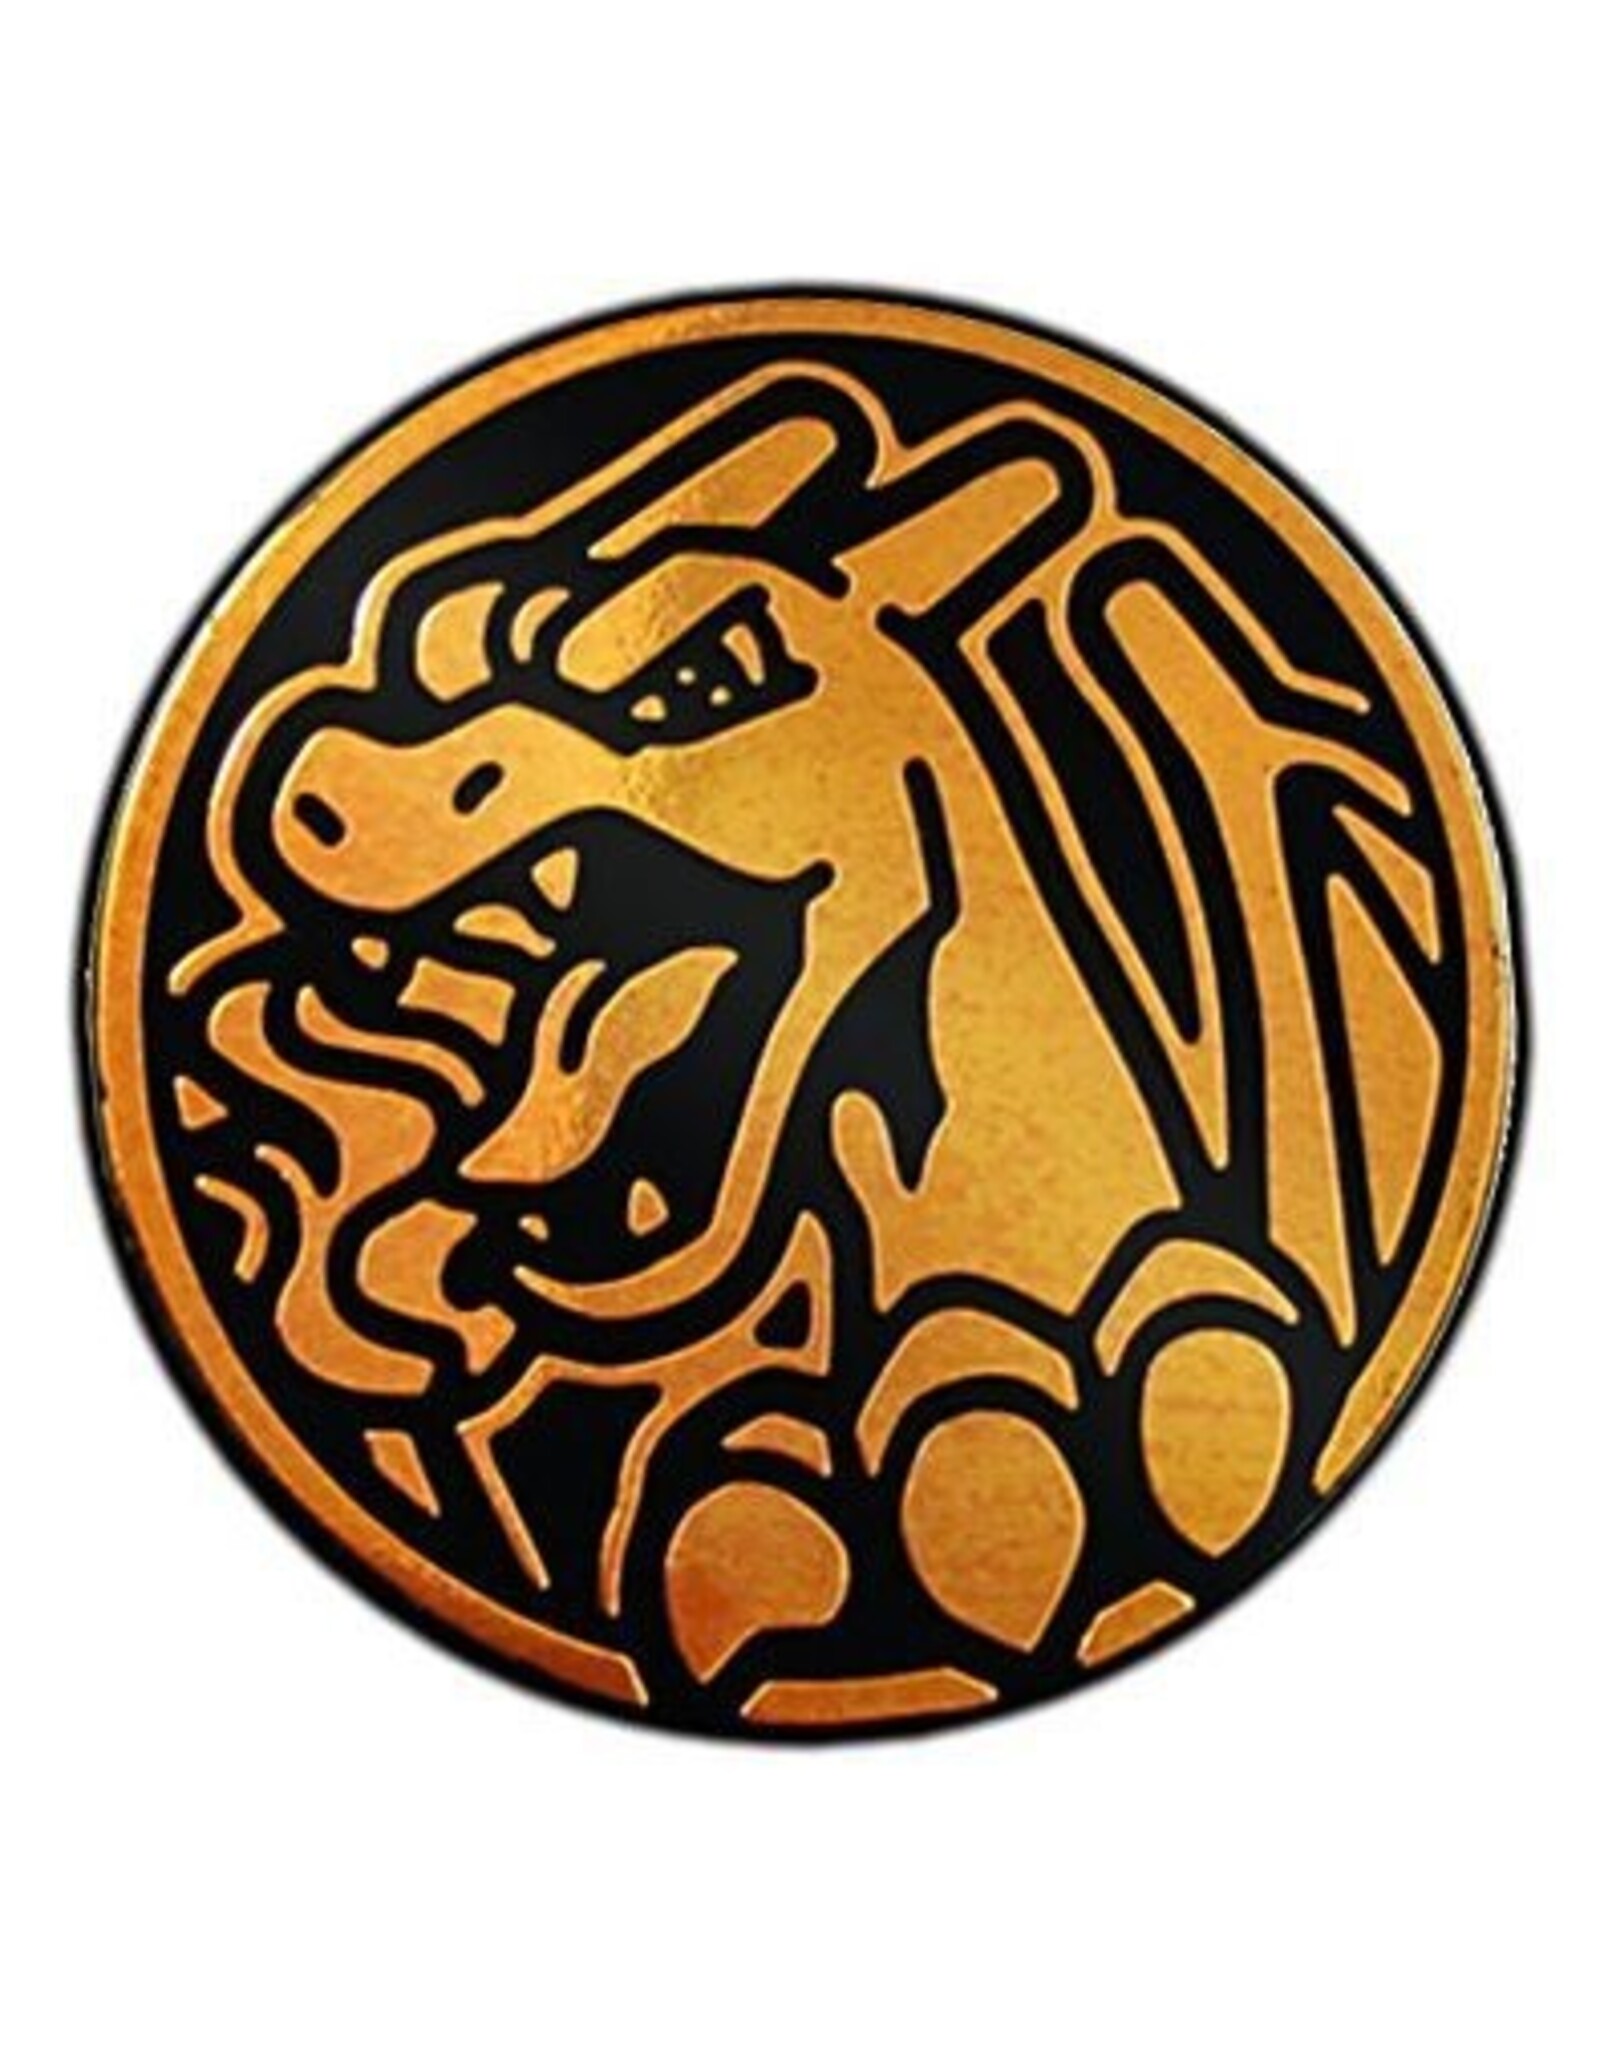 Charizard GX Orange Holofoil coin